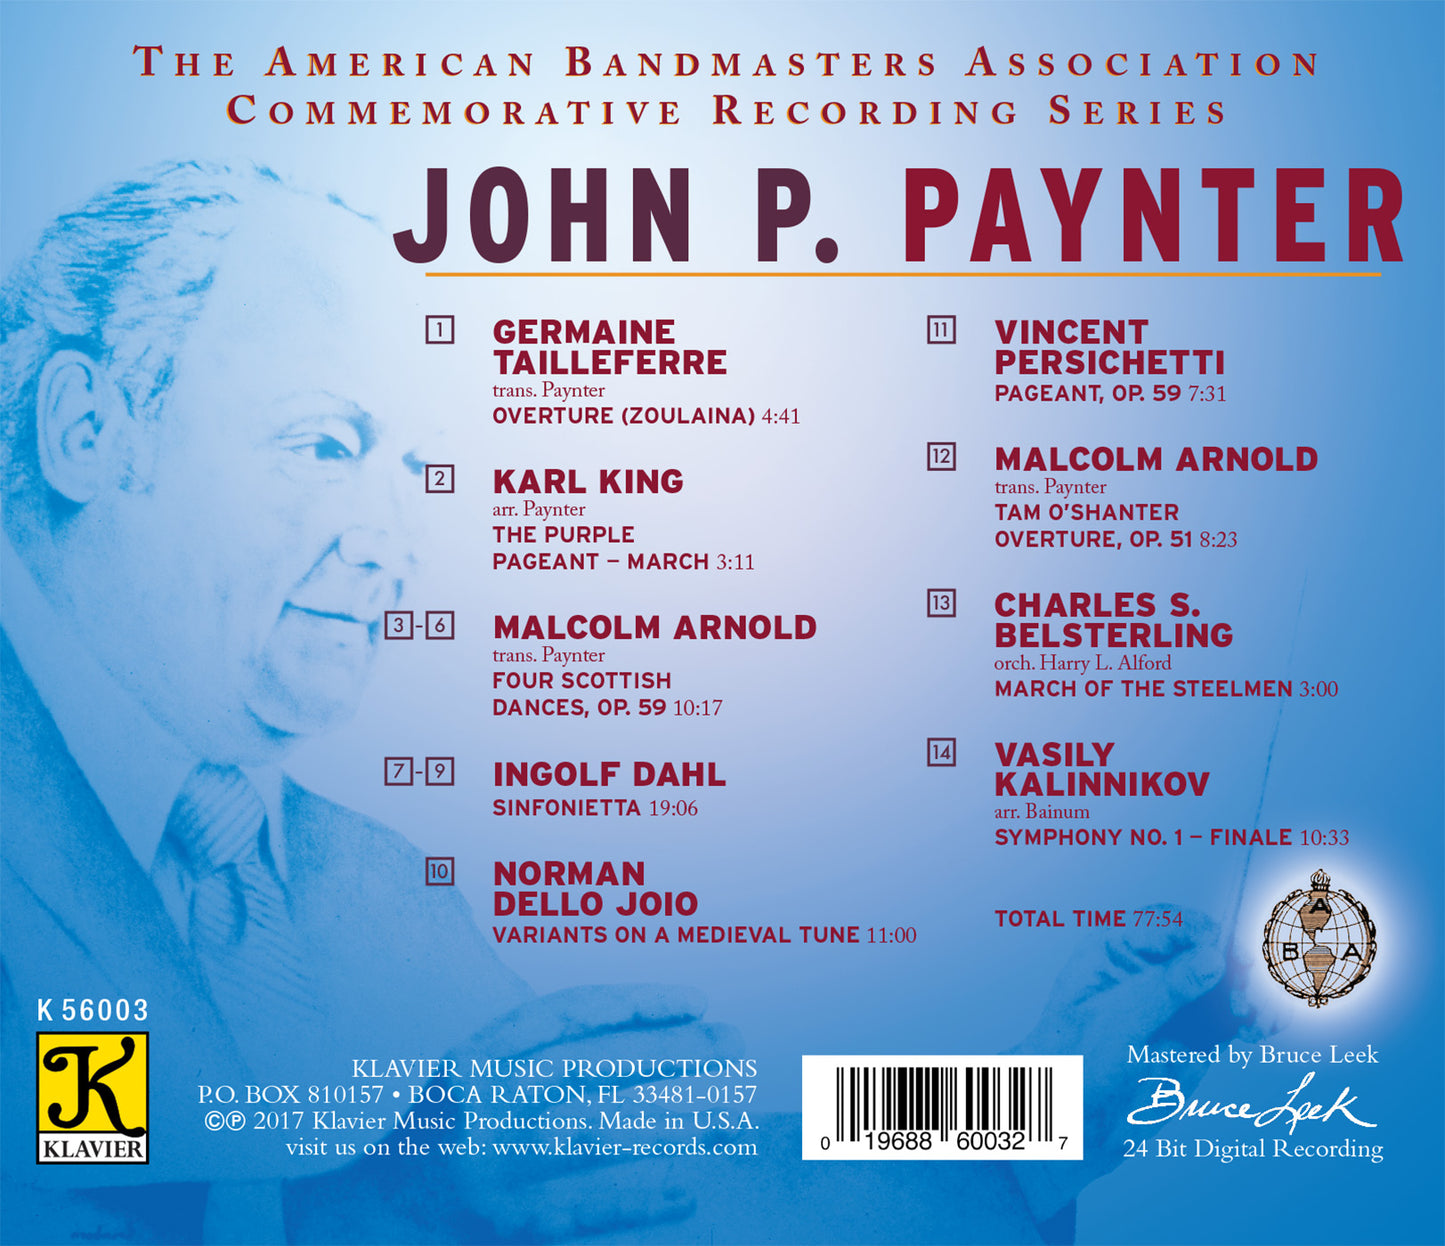 John P. Paynter: American Bandmasters Association Recording Series